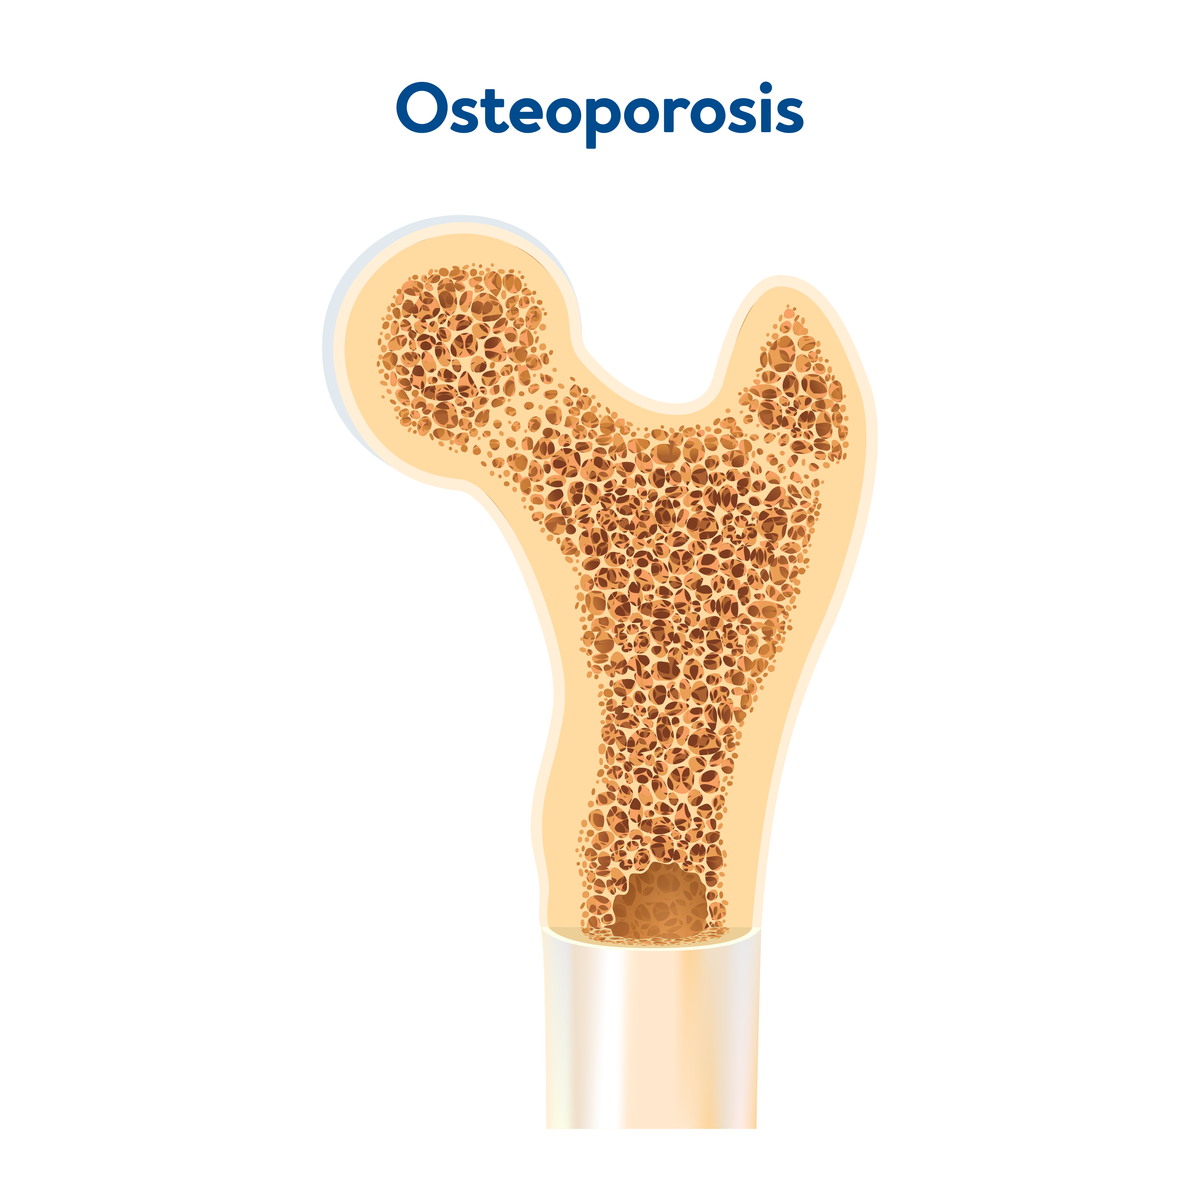 Osteoporosis illustration